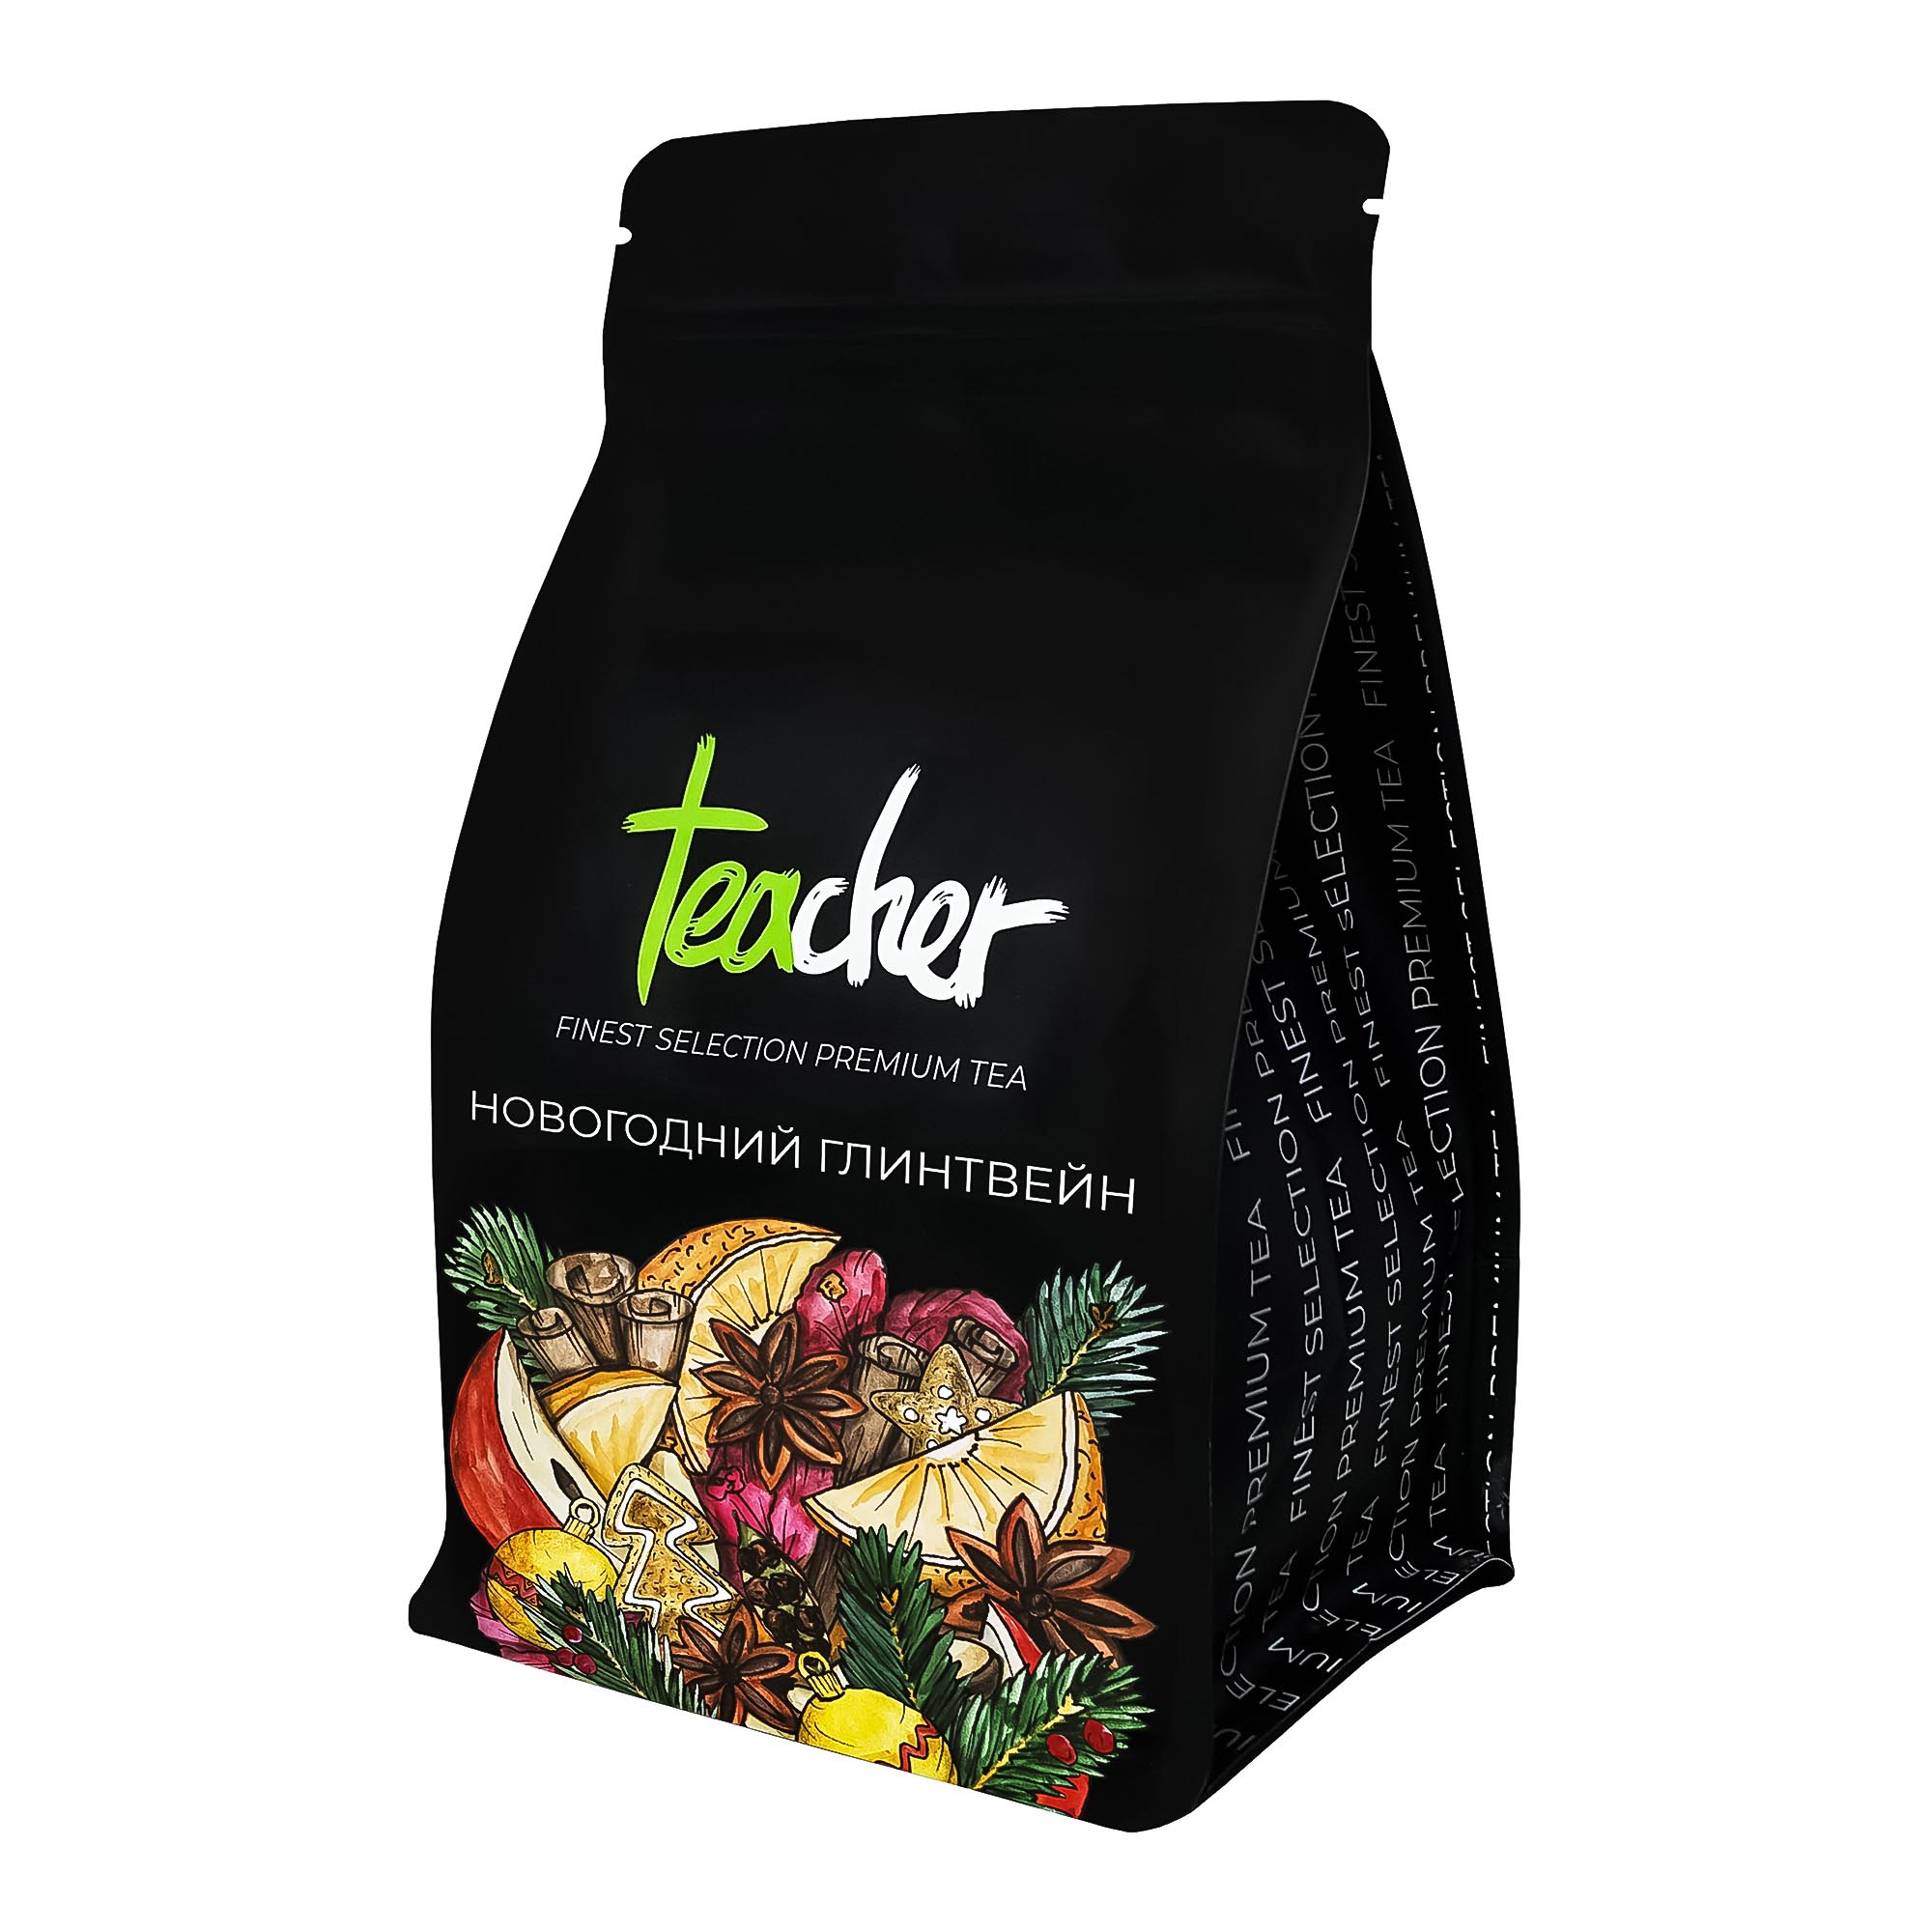 Чай Teacher Новогодний глинтвейн 250 г чай черный teacher изысканный бергамот 250 г